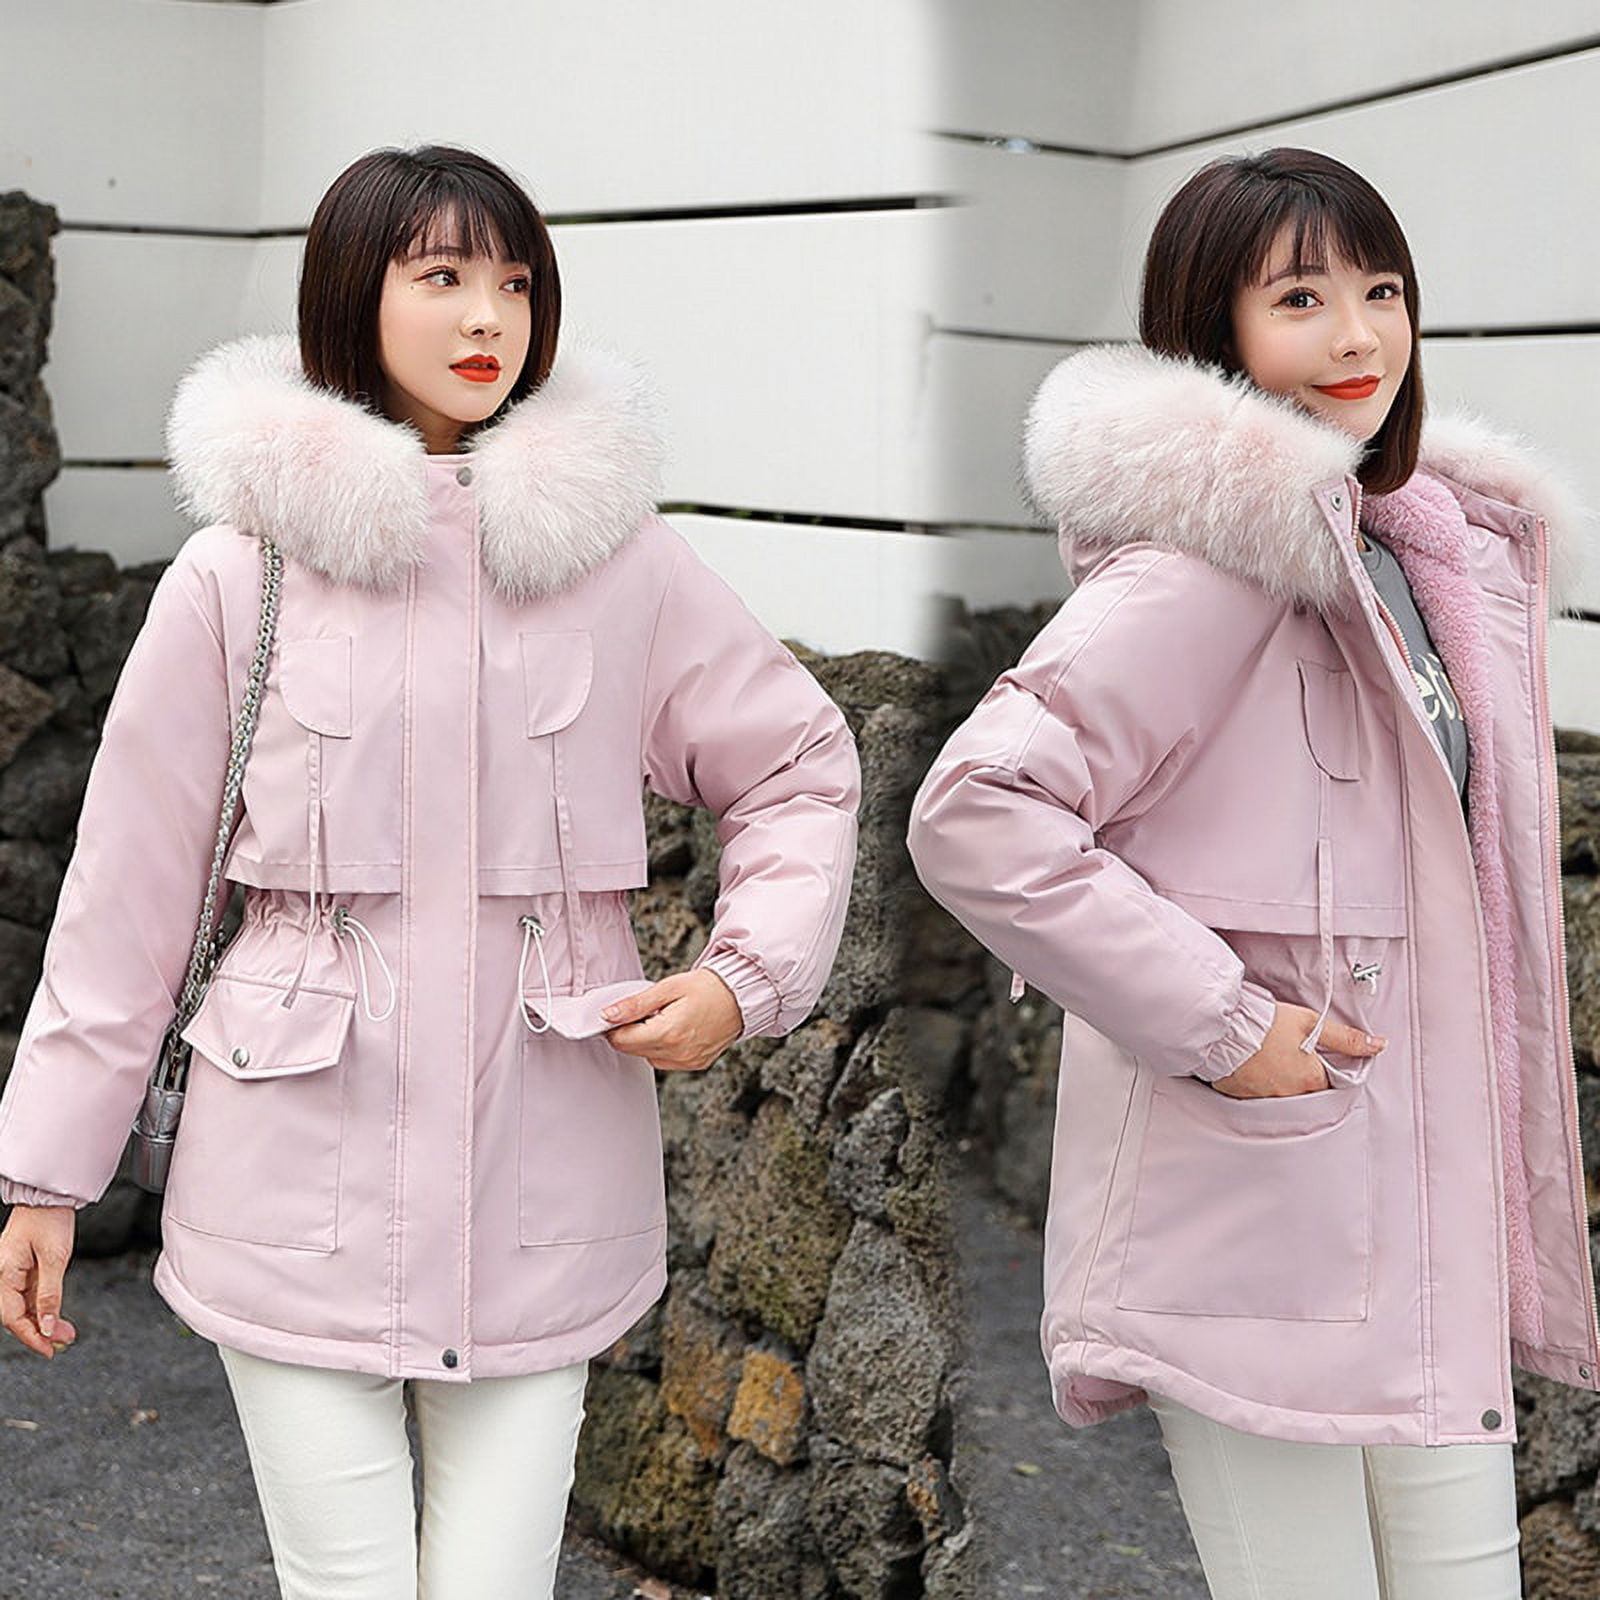 Danceemangoo Winter Jacket Women Short Hooded Down Cotton Coat Winter Cotton Clothes Fashion Korean Loose Cotton Jacket Casual Coat Zm1405, Adult